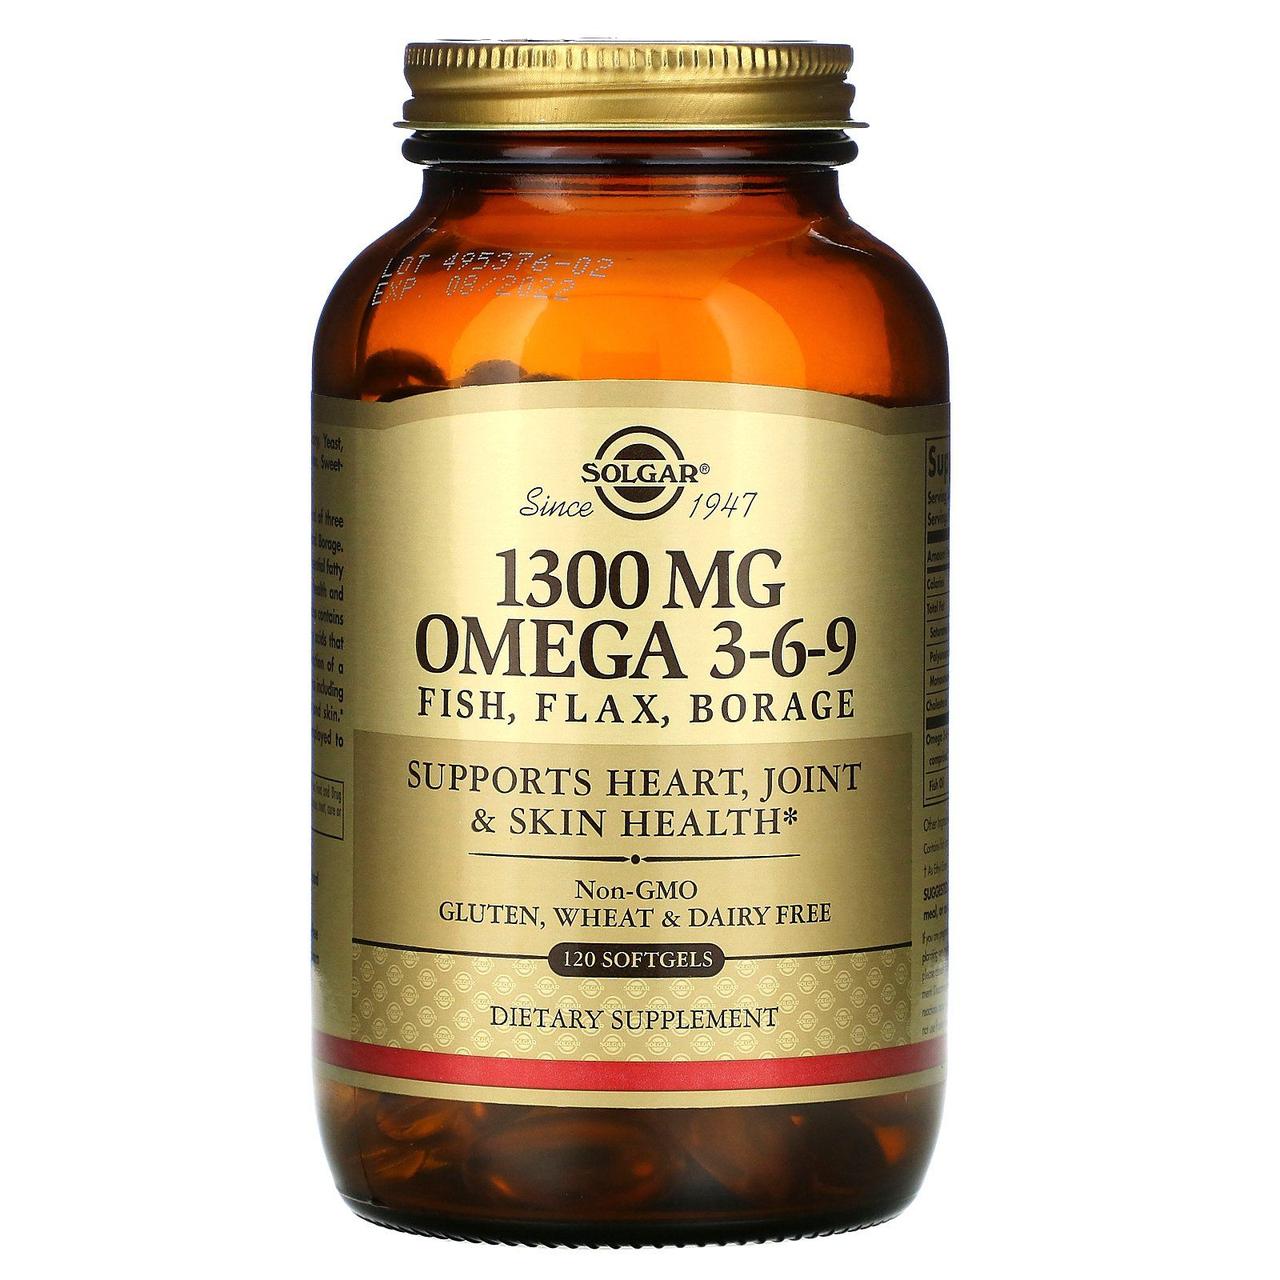 Жирные кислоты Solgar Omega 3-6-9 1300 mg 120 softgels,  ml, Solgar. Omega 3 (Fish Oil). General Health Ligament and Joint strengthening Skin health CVD Prevention Anti-inflammatory properties 